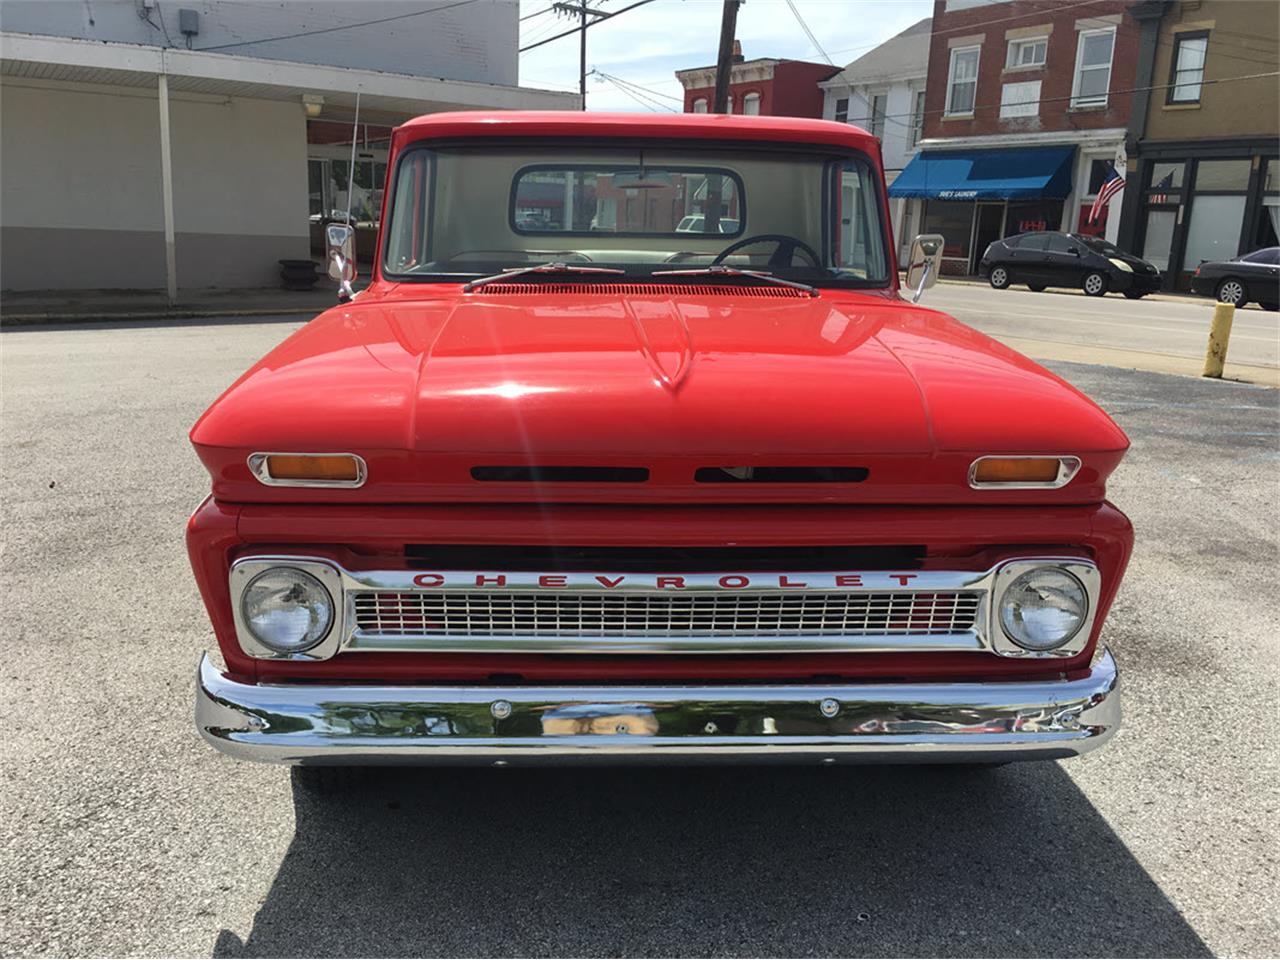 1966 Chevrolet 3/4-Ton Pickup for Sale | 0 | CC-1231406